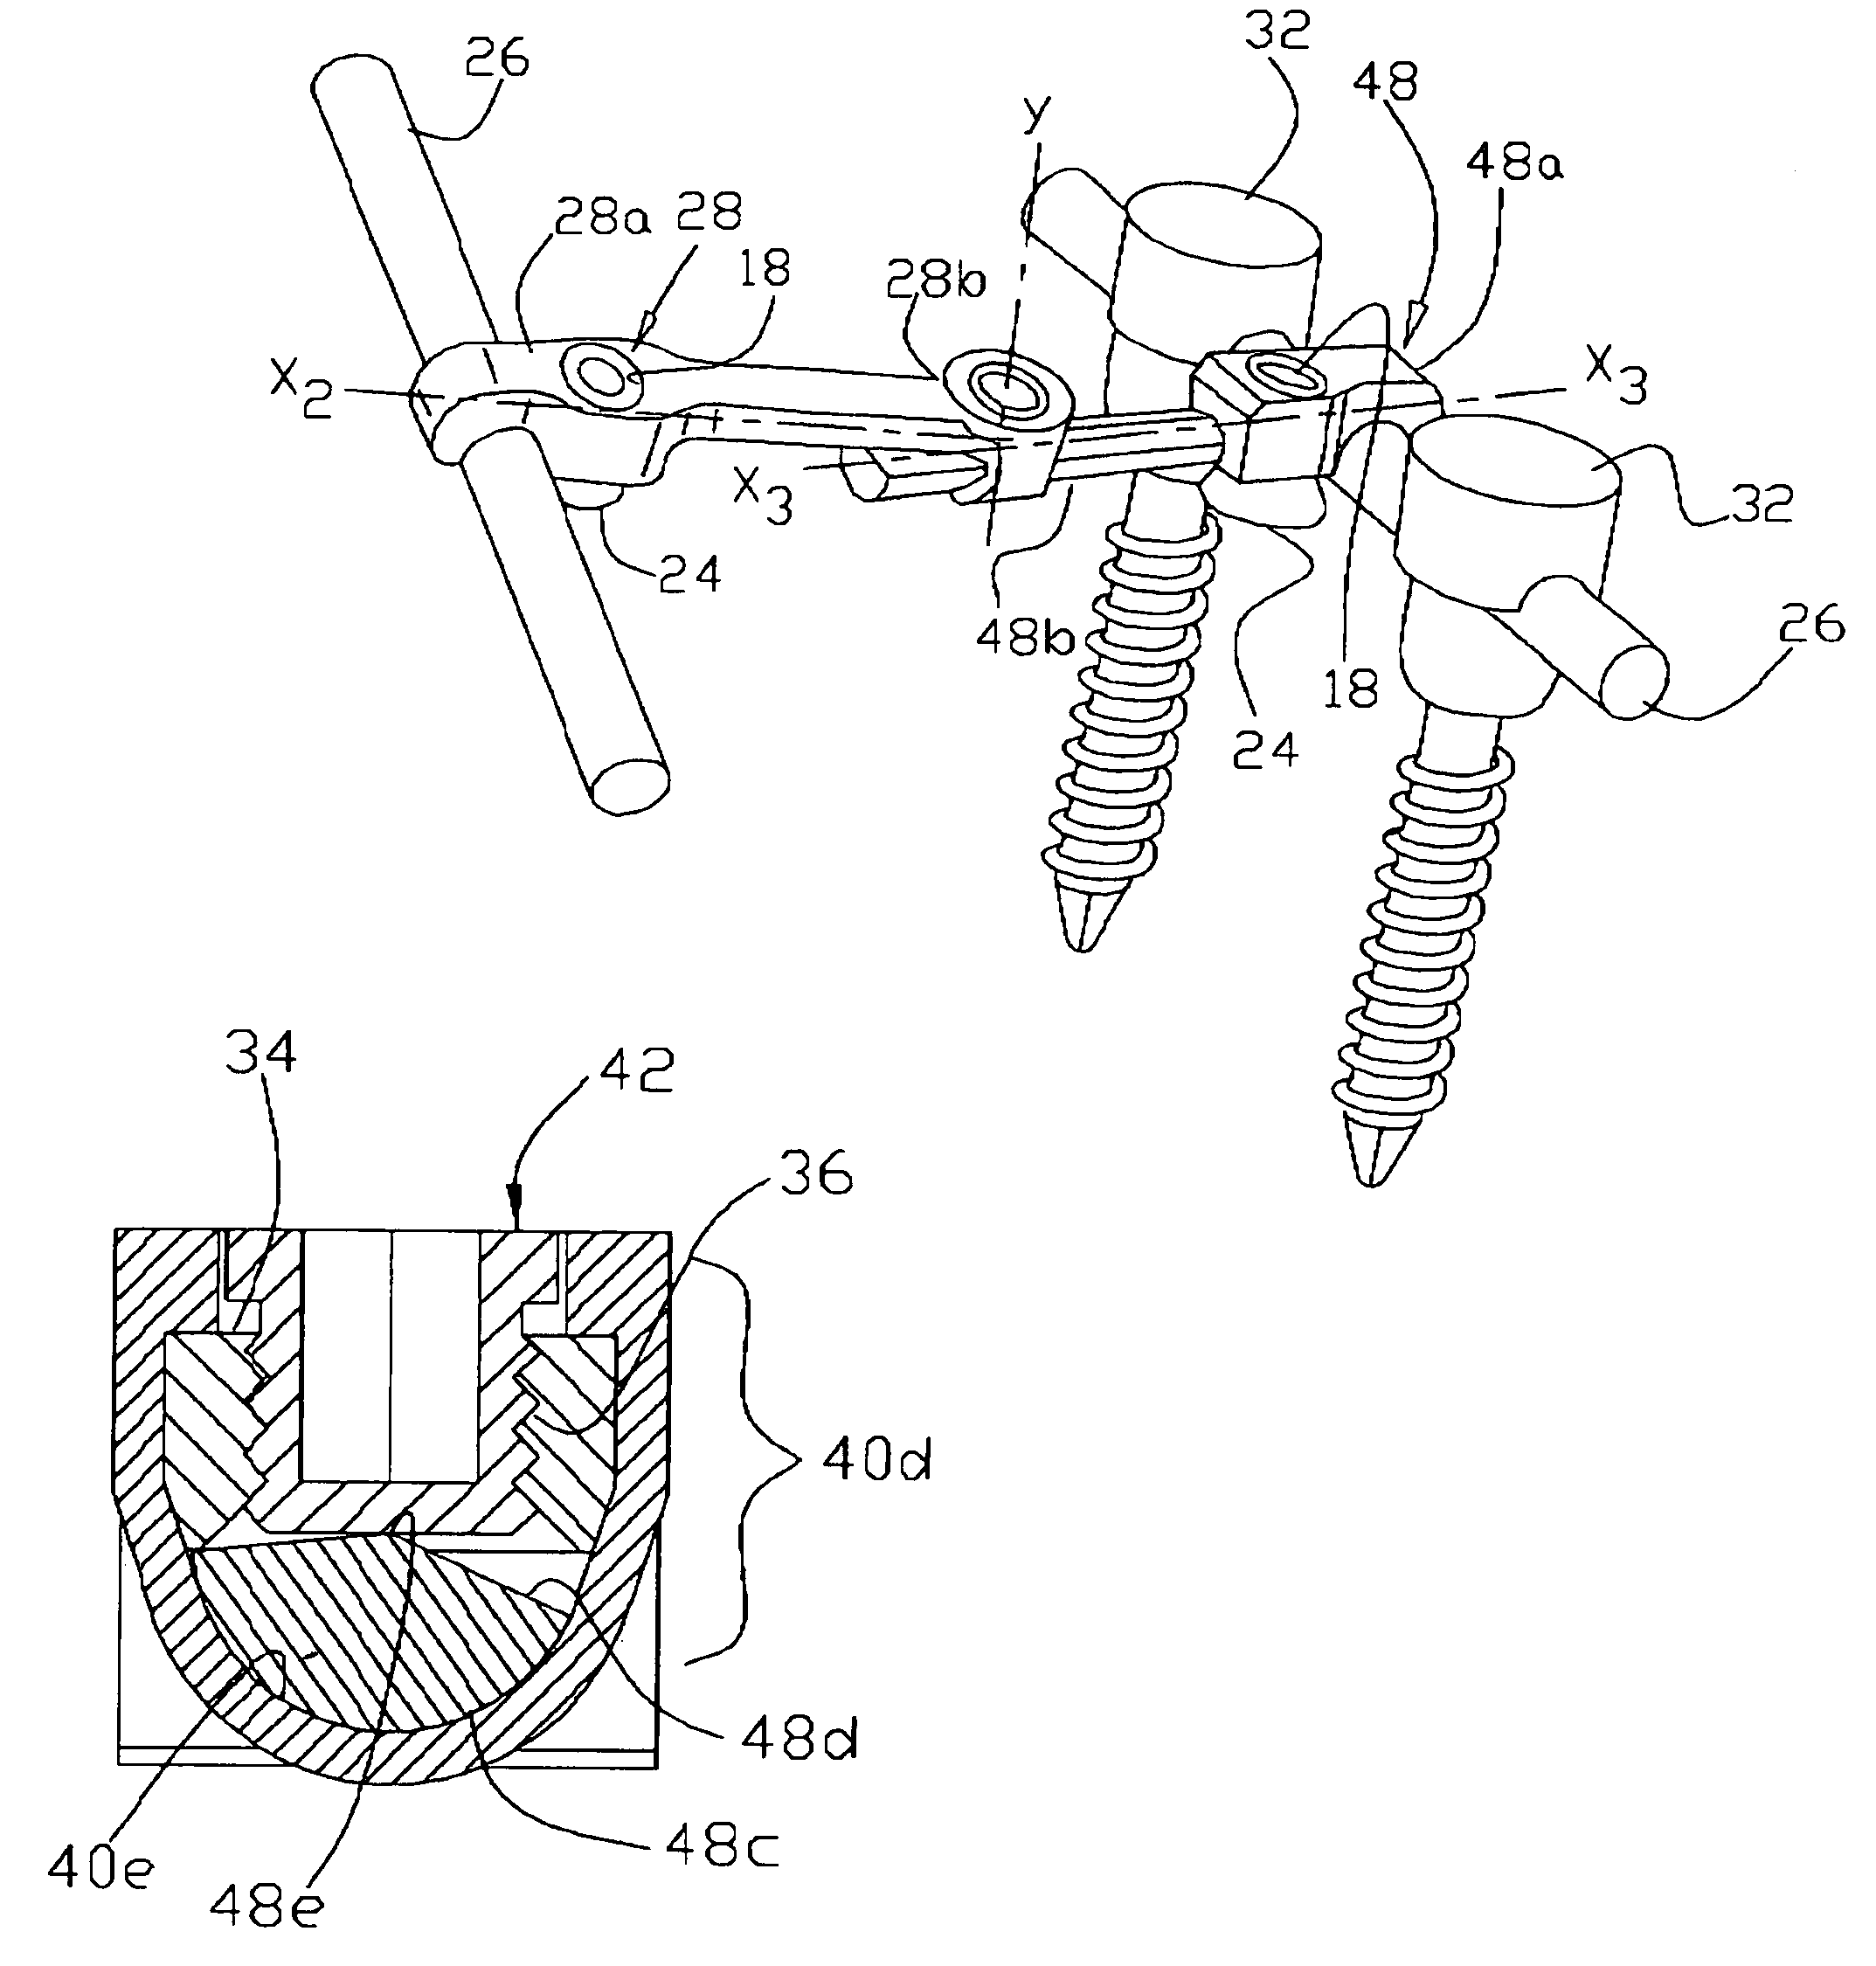 Transverse connector system